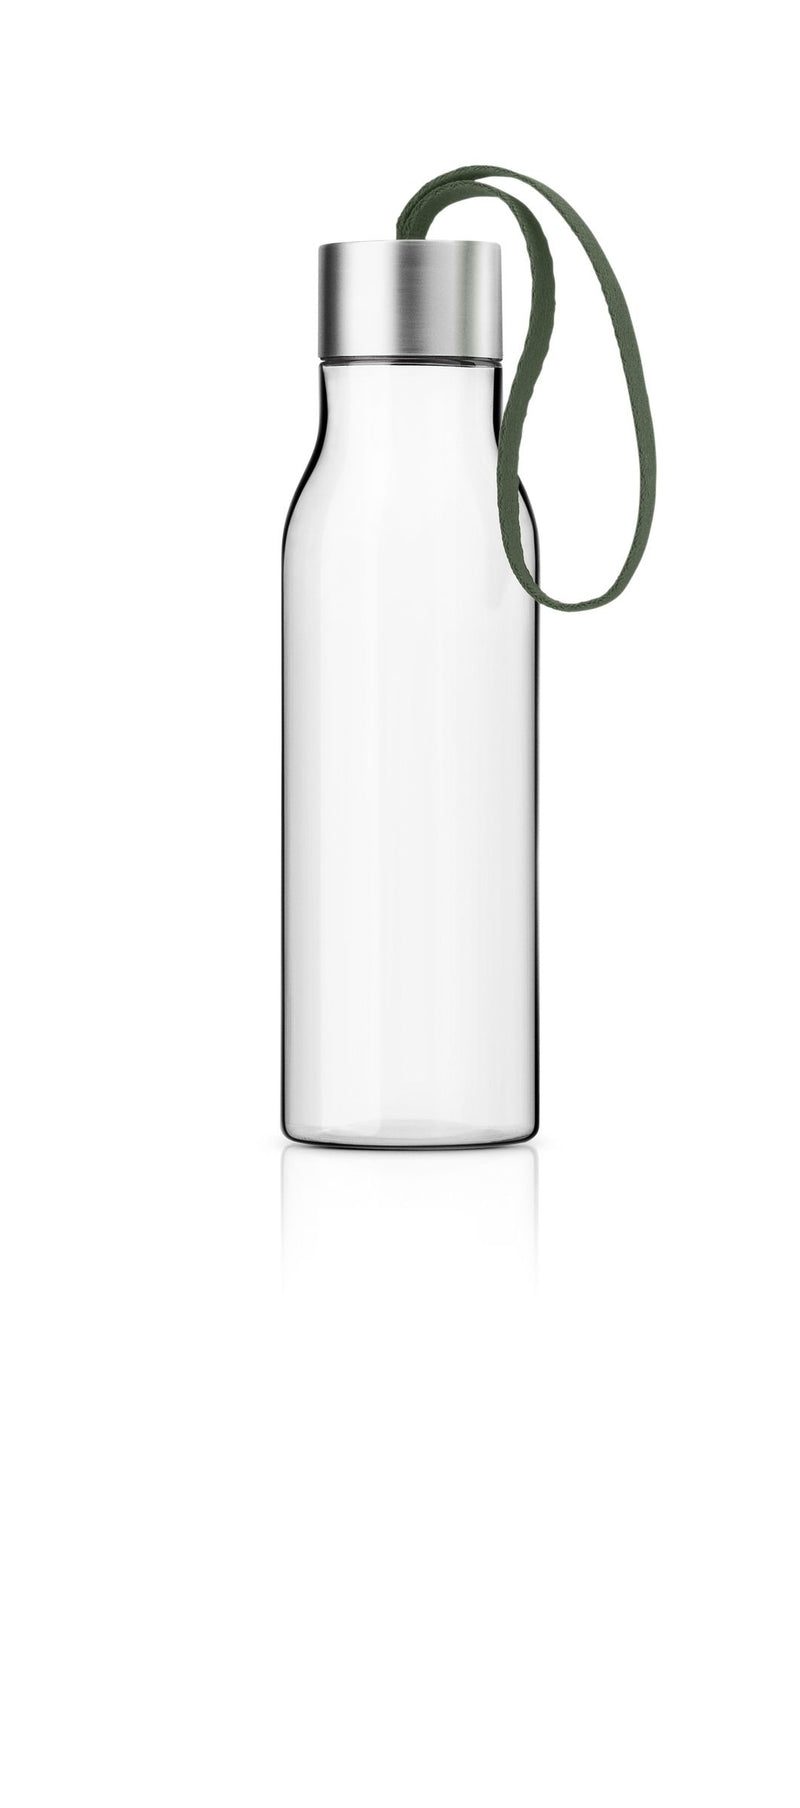 Eva Solo Drikkeflaske - Cactus Green - 0,5 liter